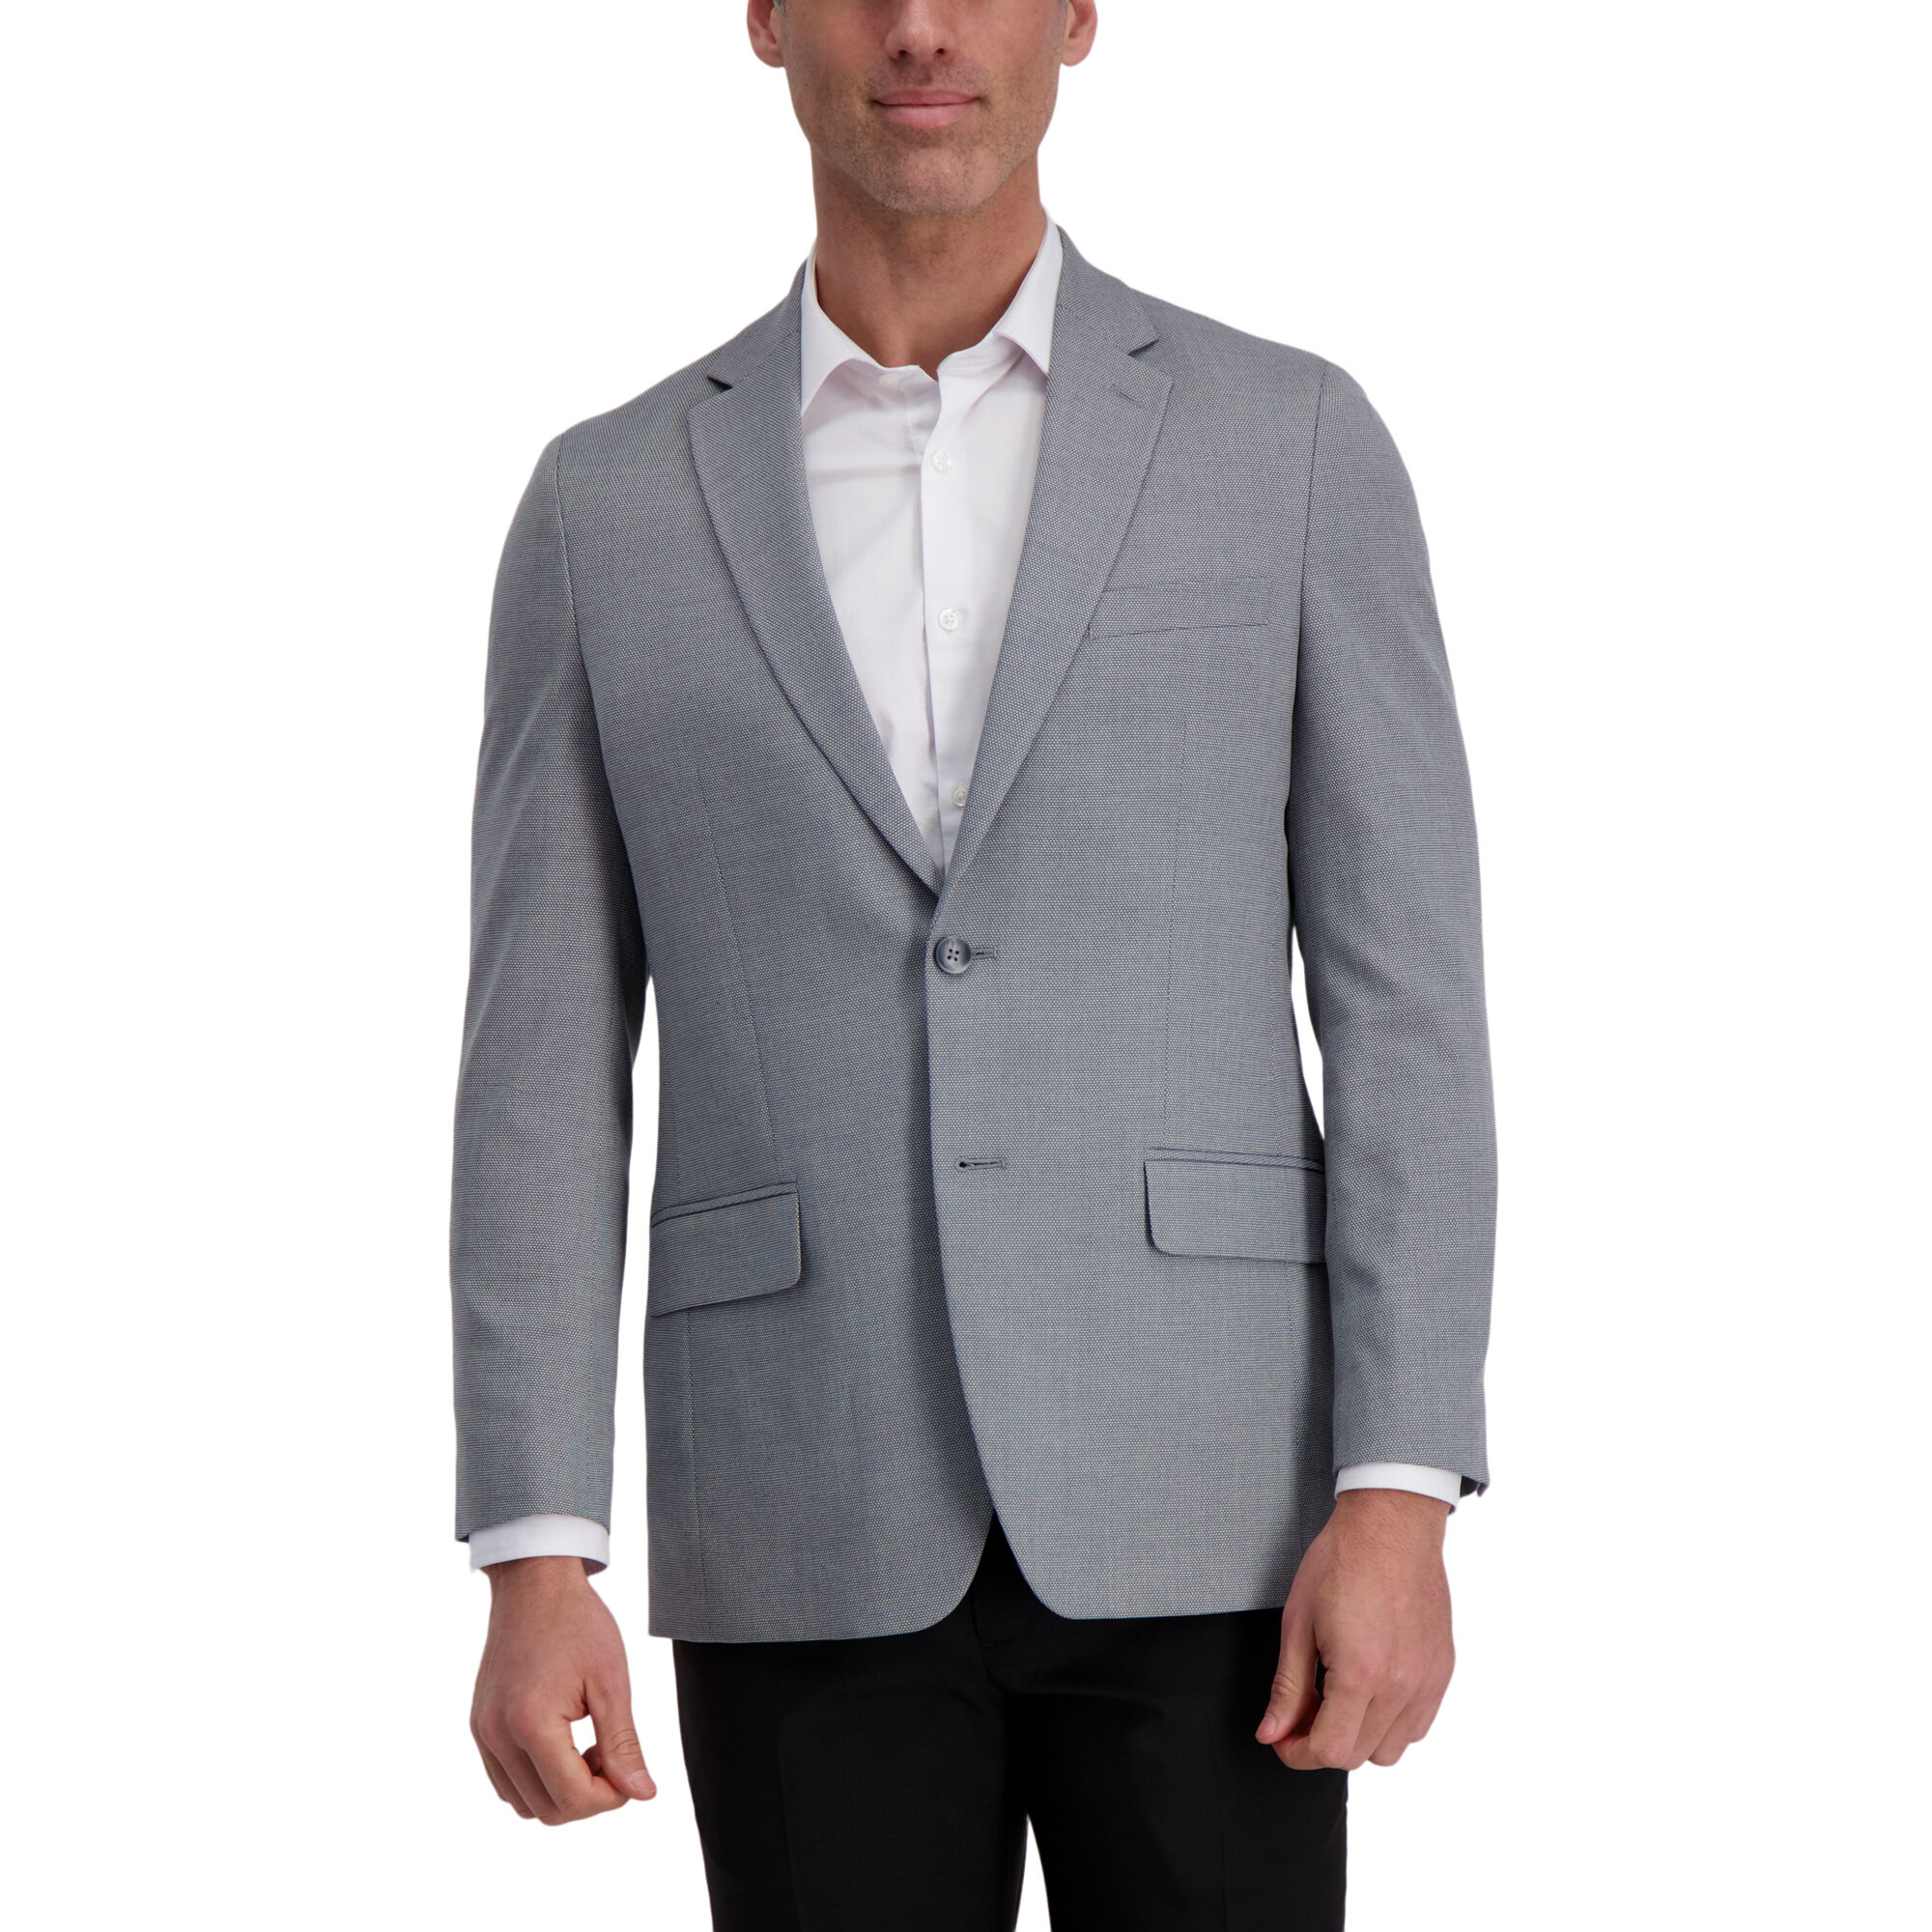 J.M. Haggar Twill Sport Coat Grey (HJ70011 Clothing Suits) photo